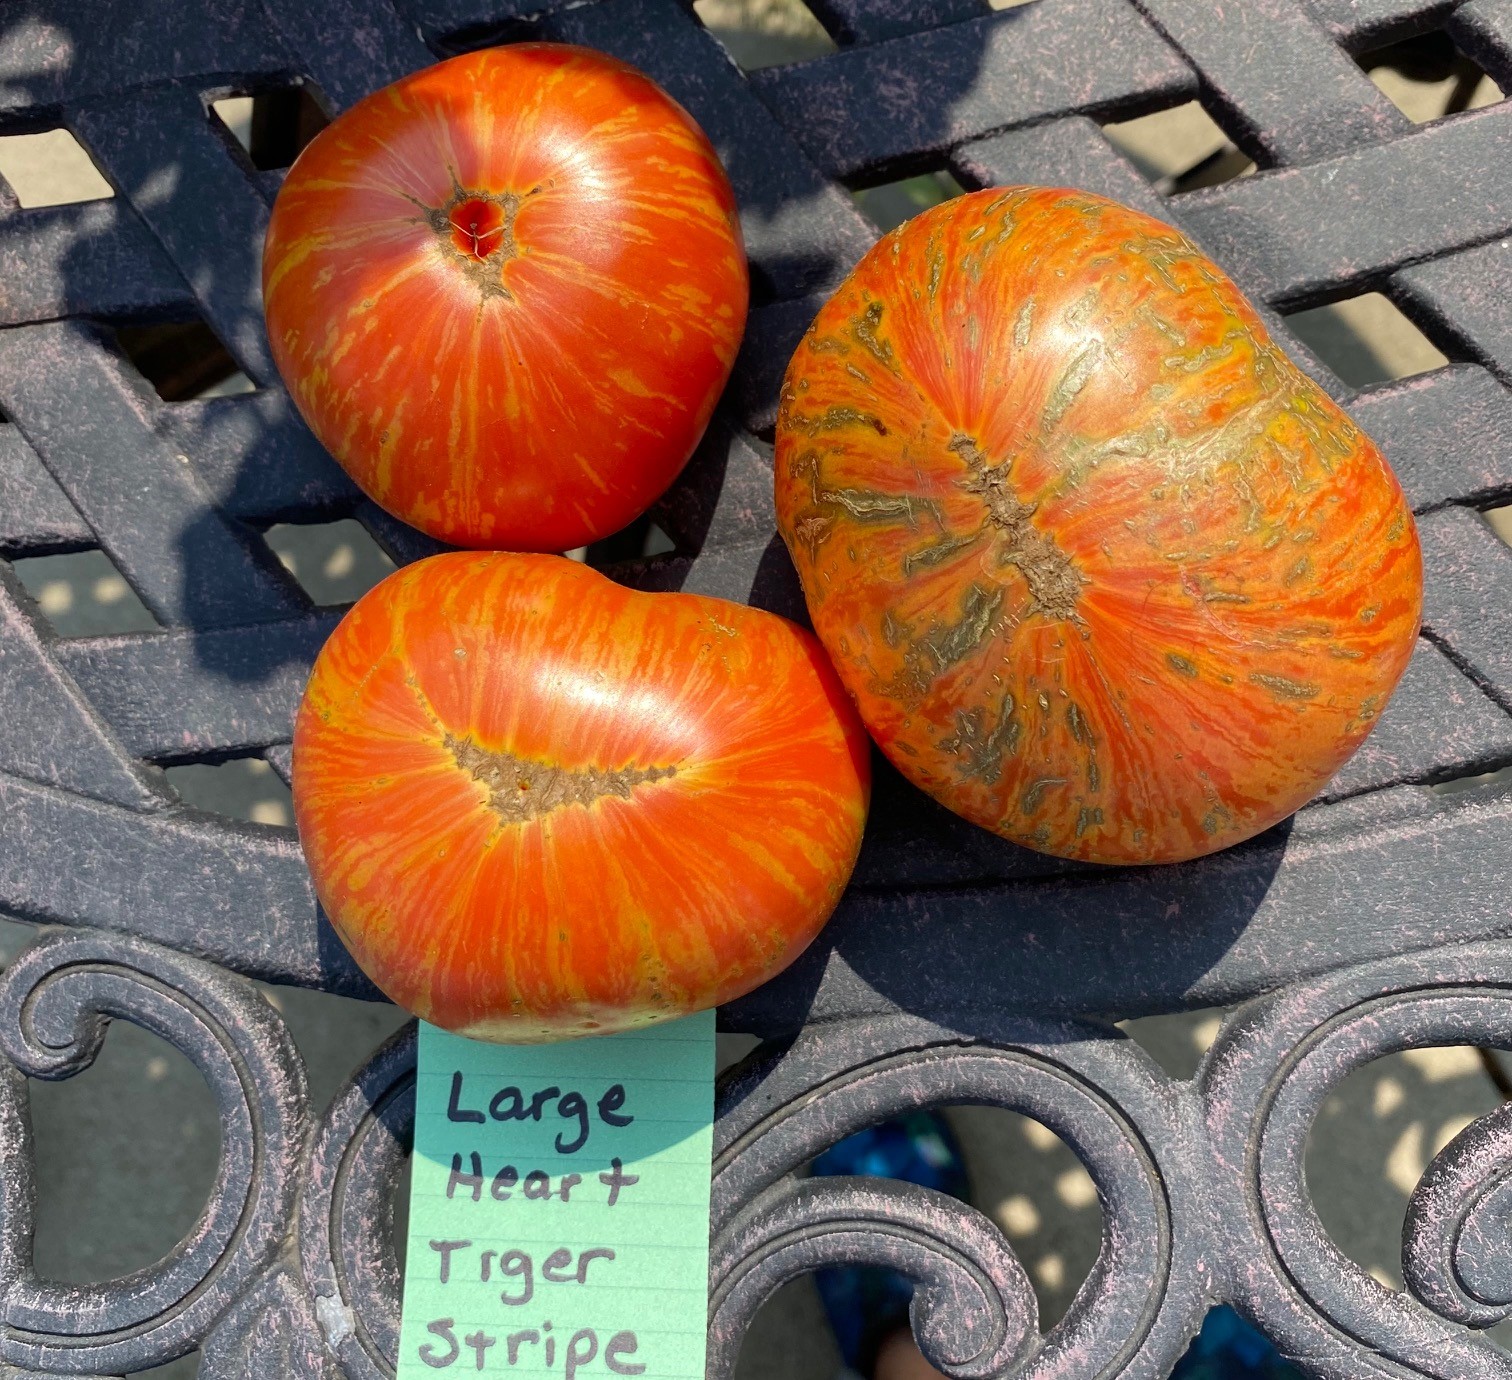 large heart tiger stripe tomato renaissance seeds of love